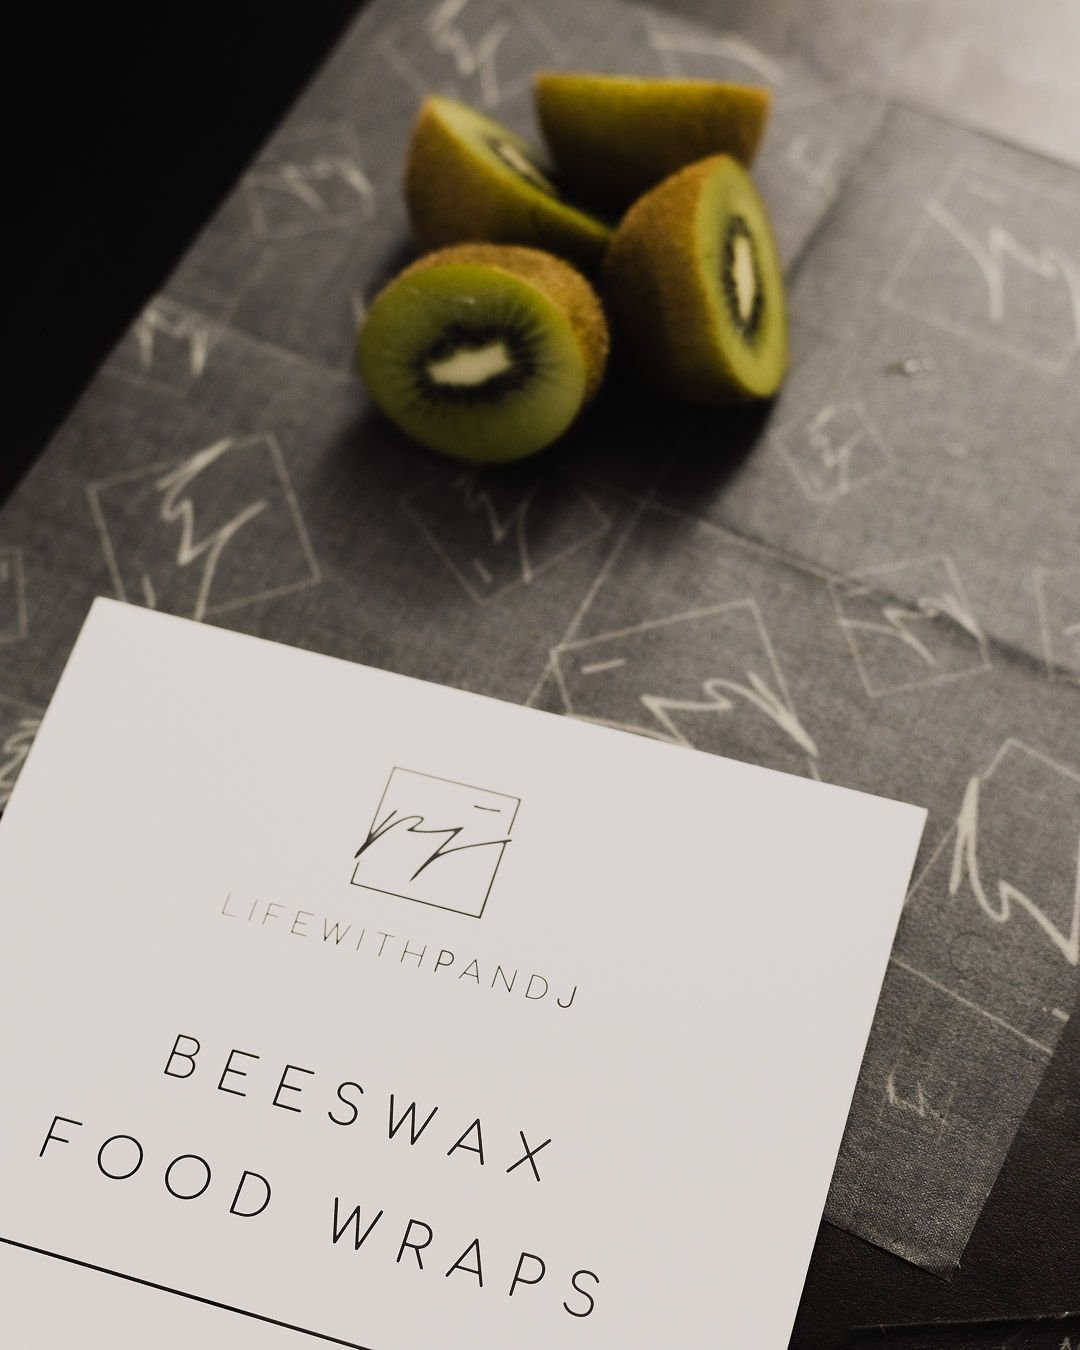 Beeswax Food Wraps - lifewithPandJ